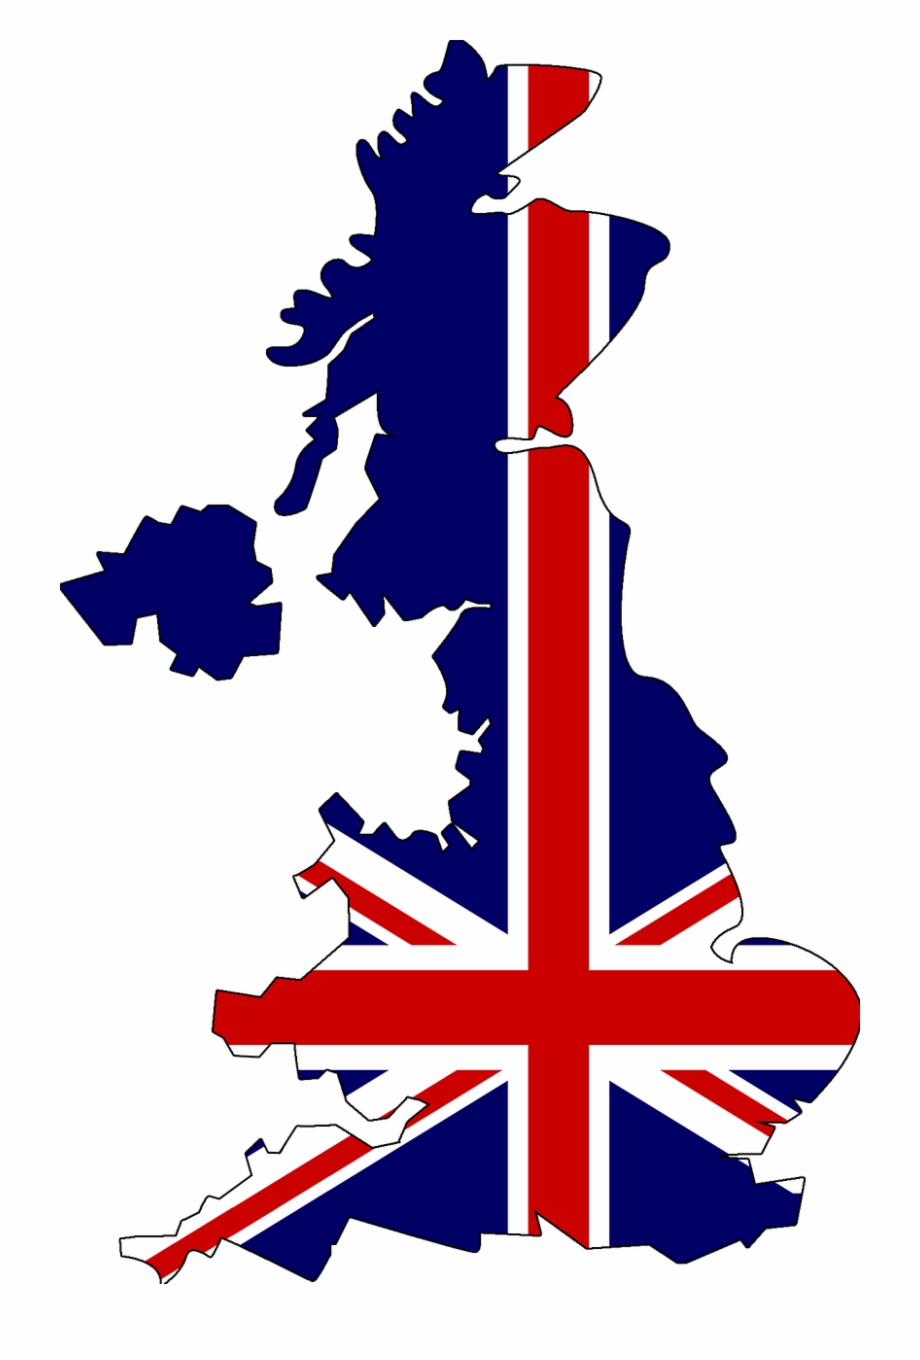 United Kingdom Map Cartoon